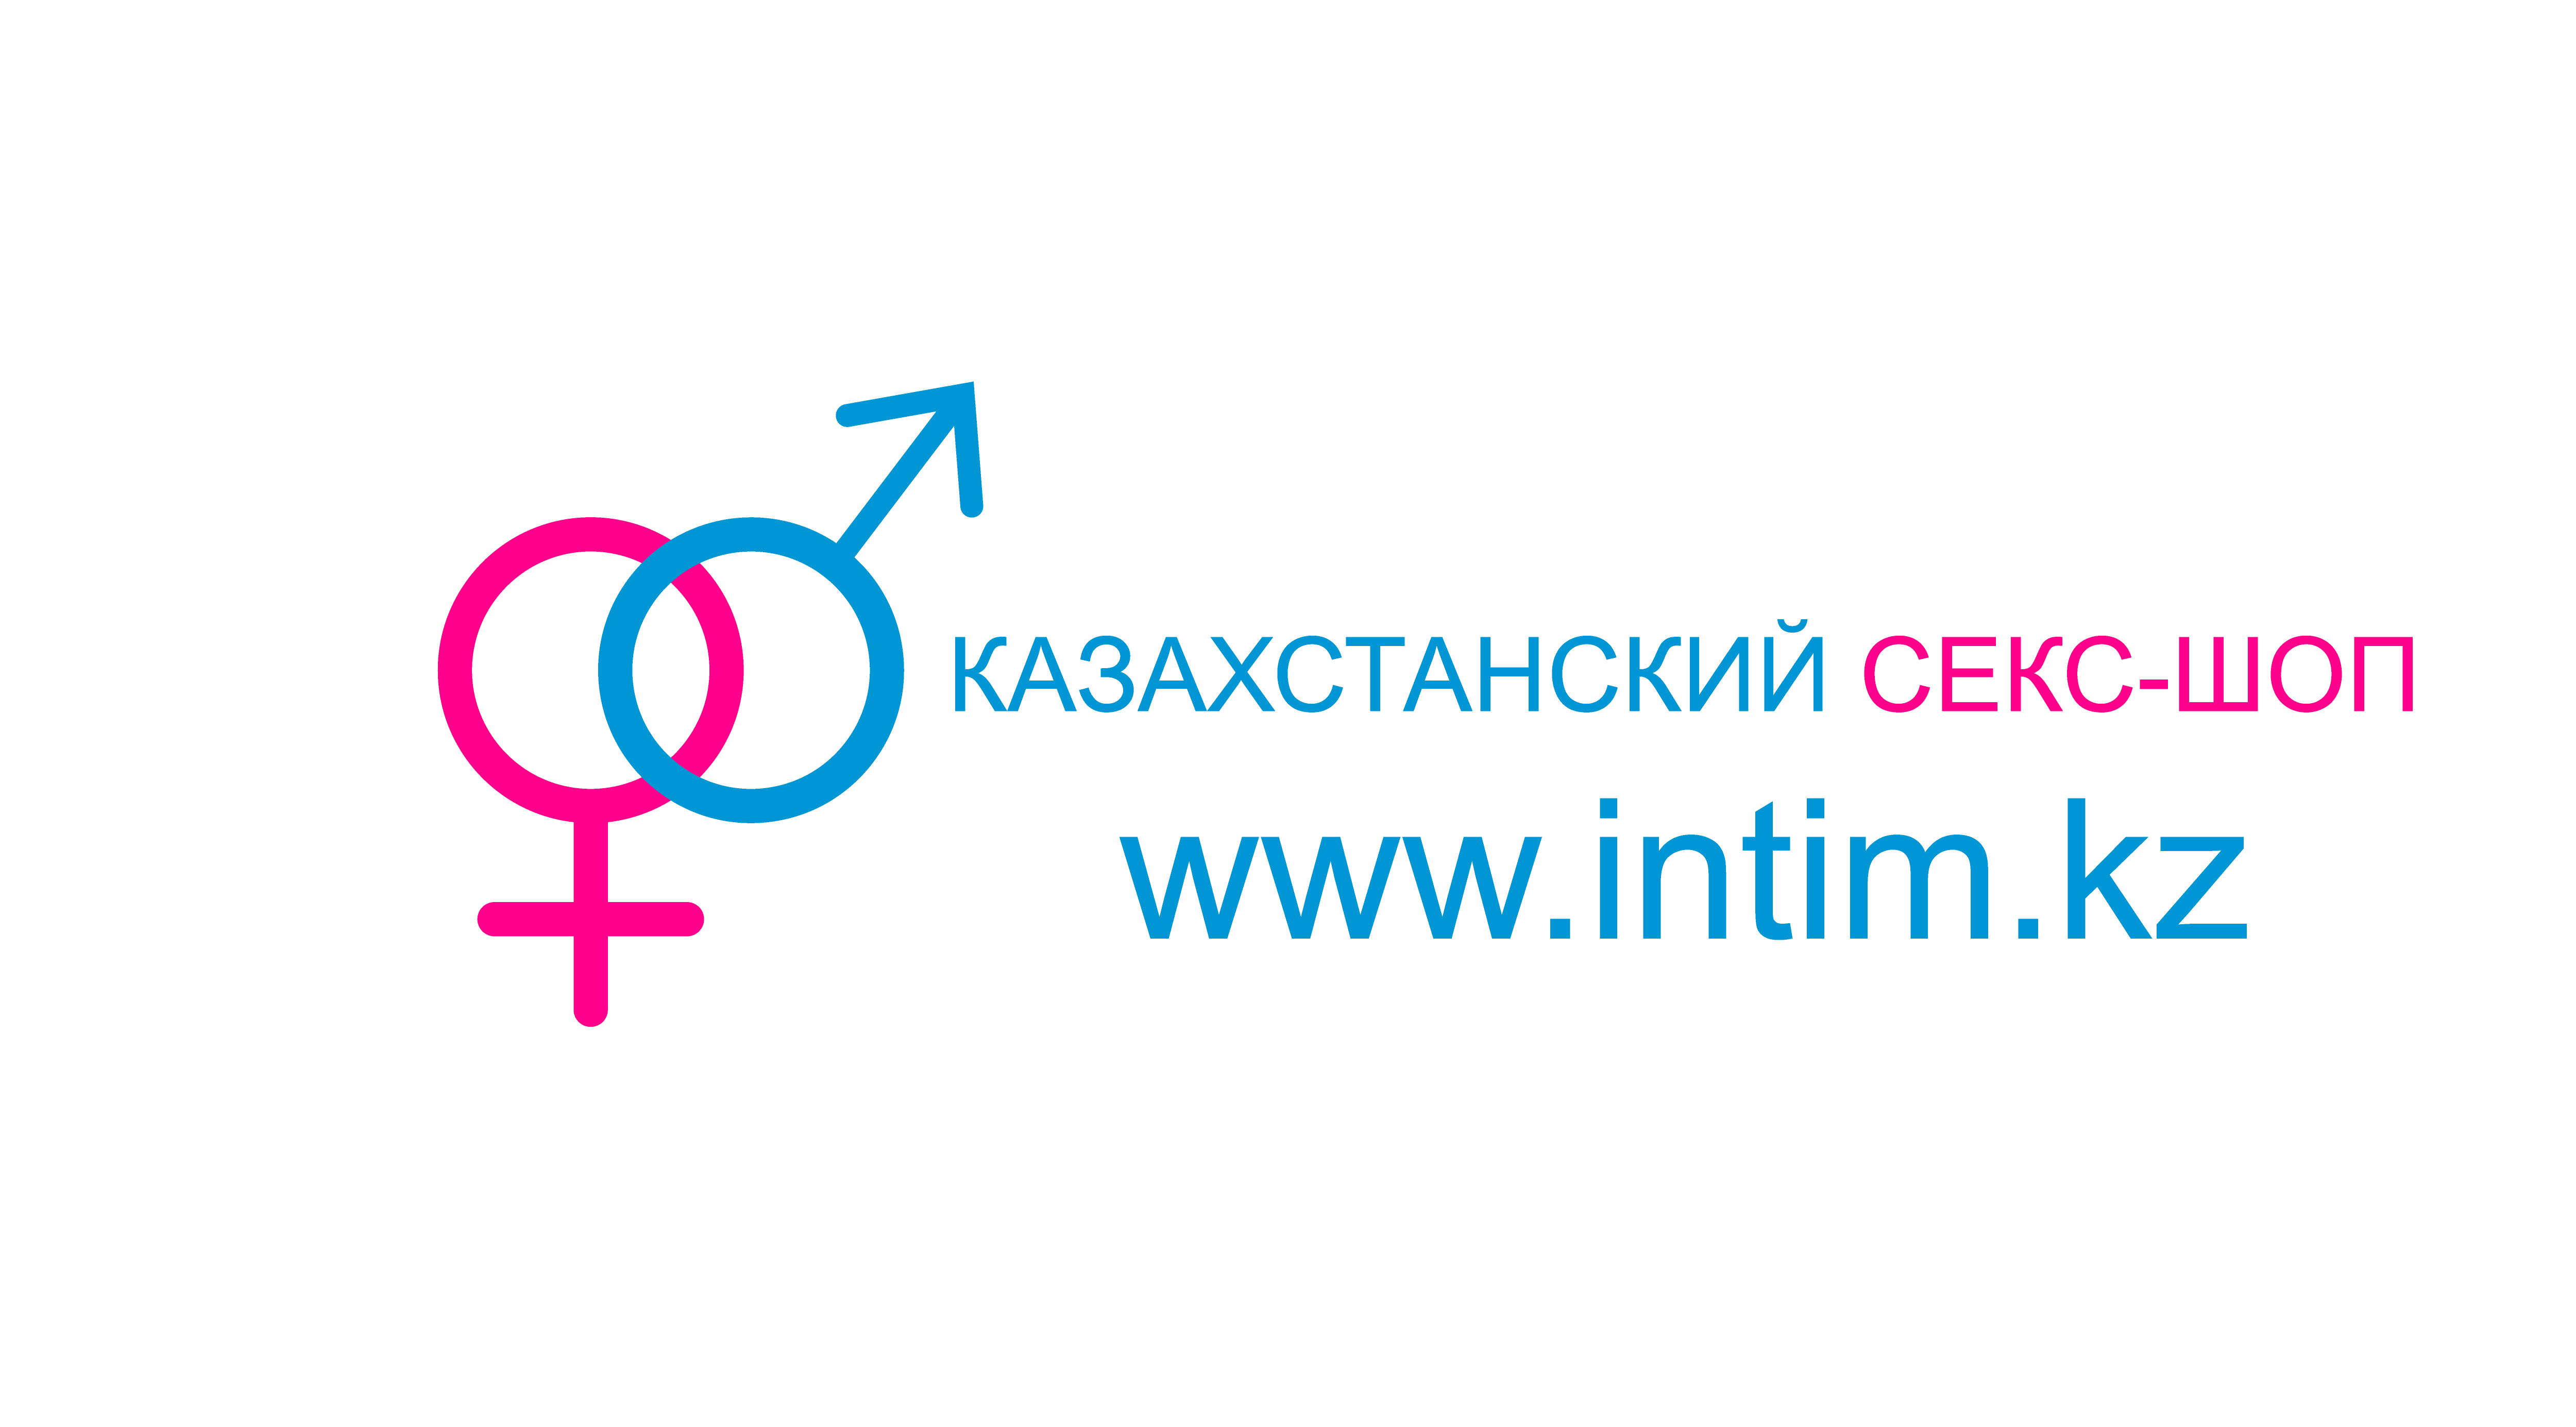  Секс-шоп в Алматы www.intim.kz - интернет-интим магазин. Sexshop in Almaty - адрес, телефон